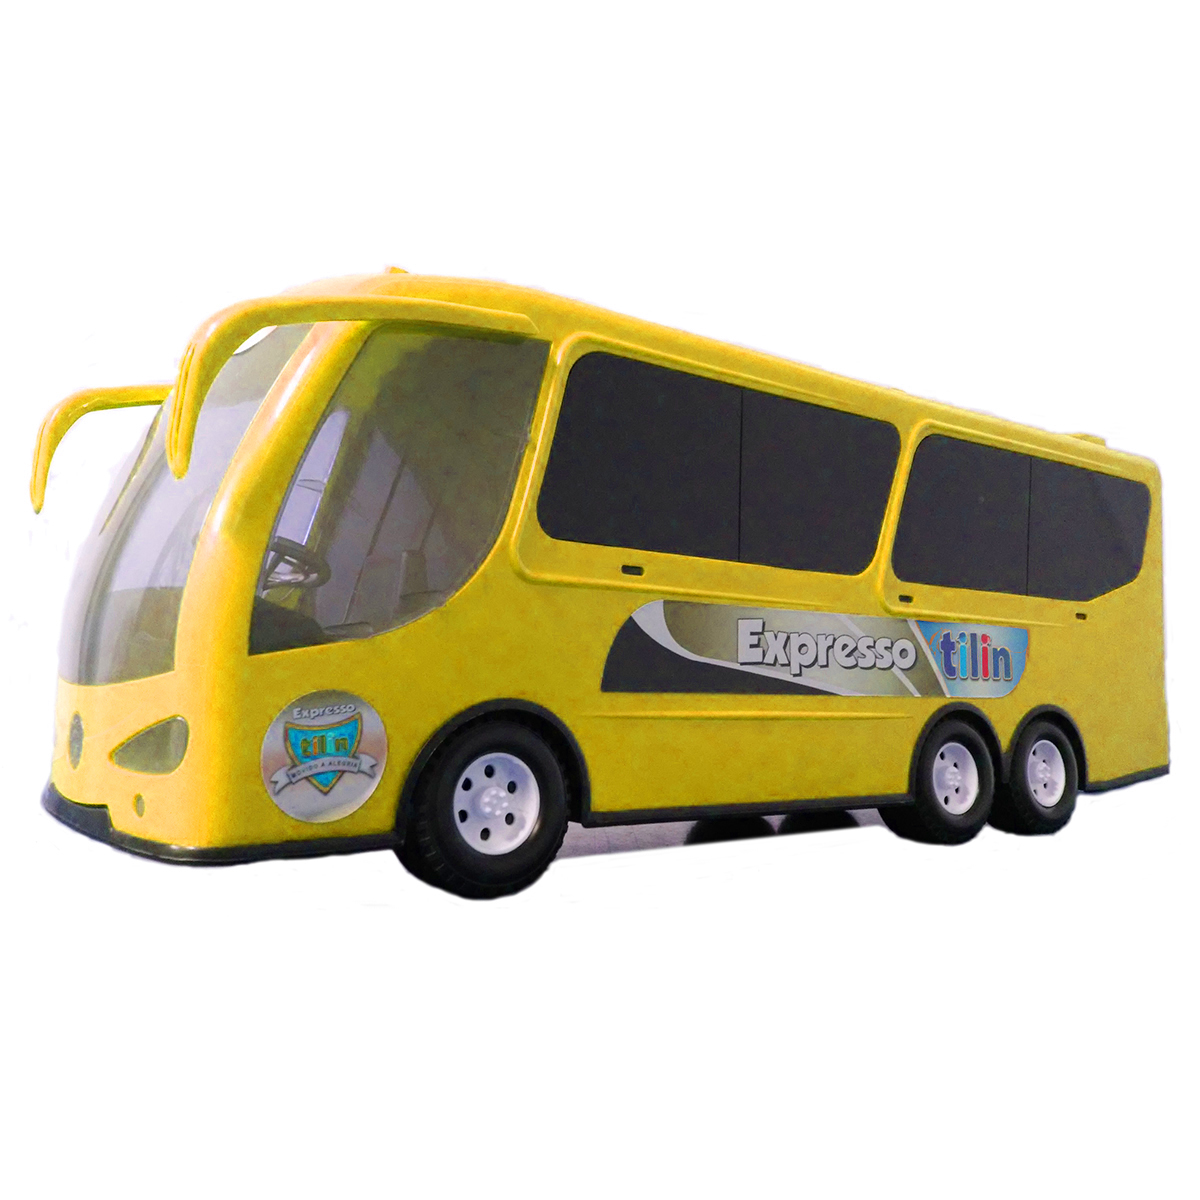 Onibus Expresso - Tilin - 60Cm 414 Amarelo